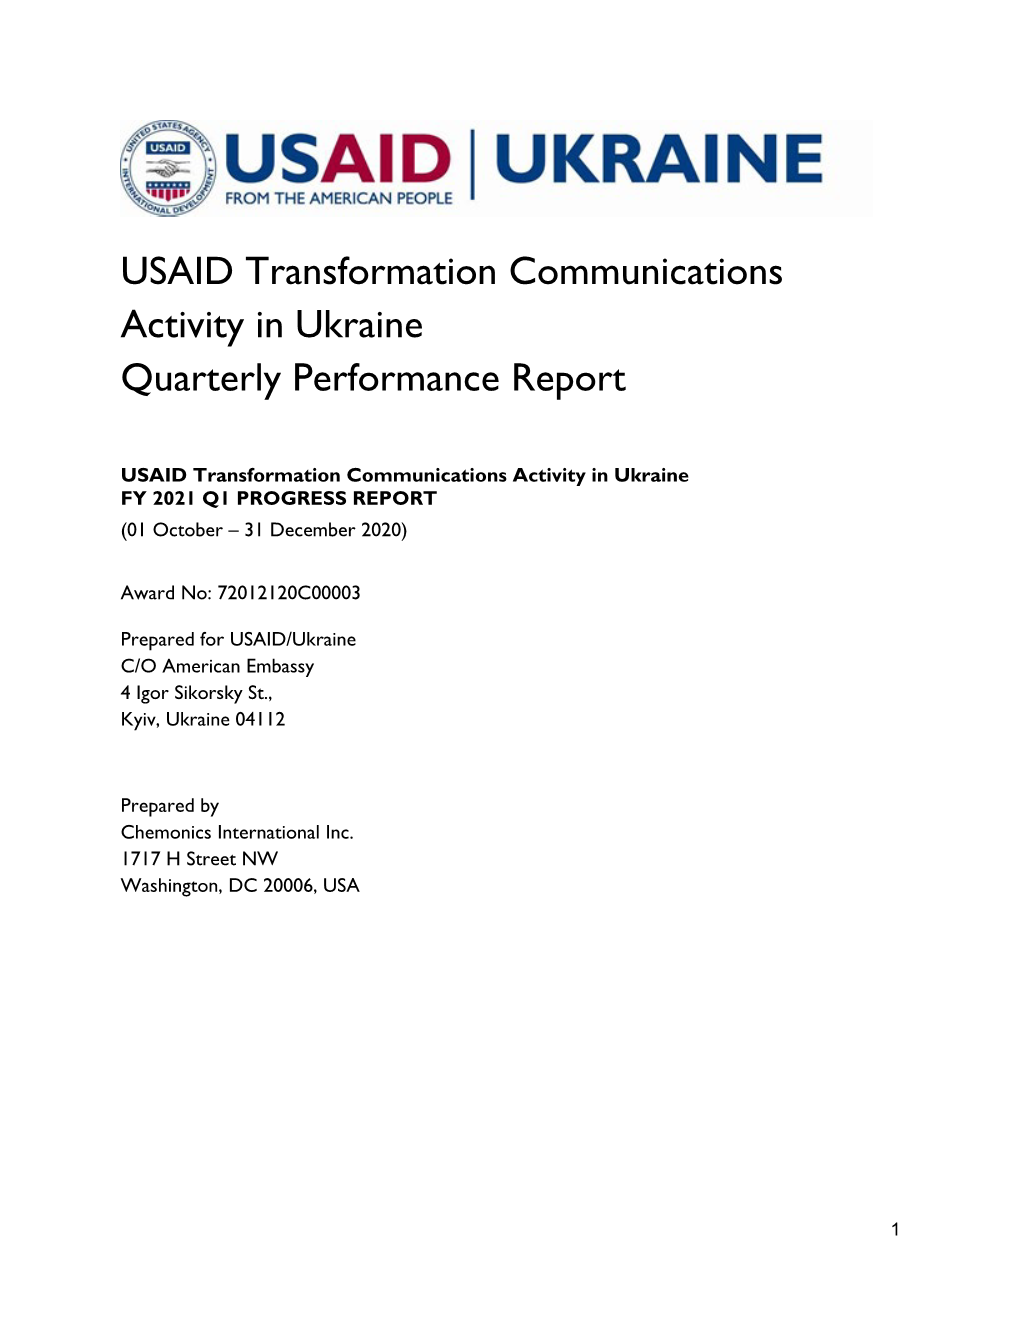 USAID Transformation Communications Activity in Ukraine Quarterly Performance Report